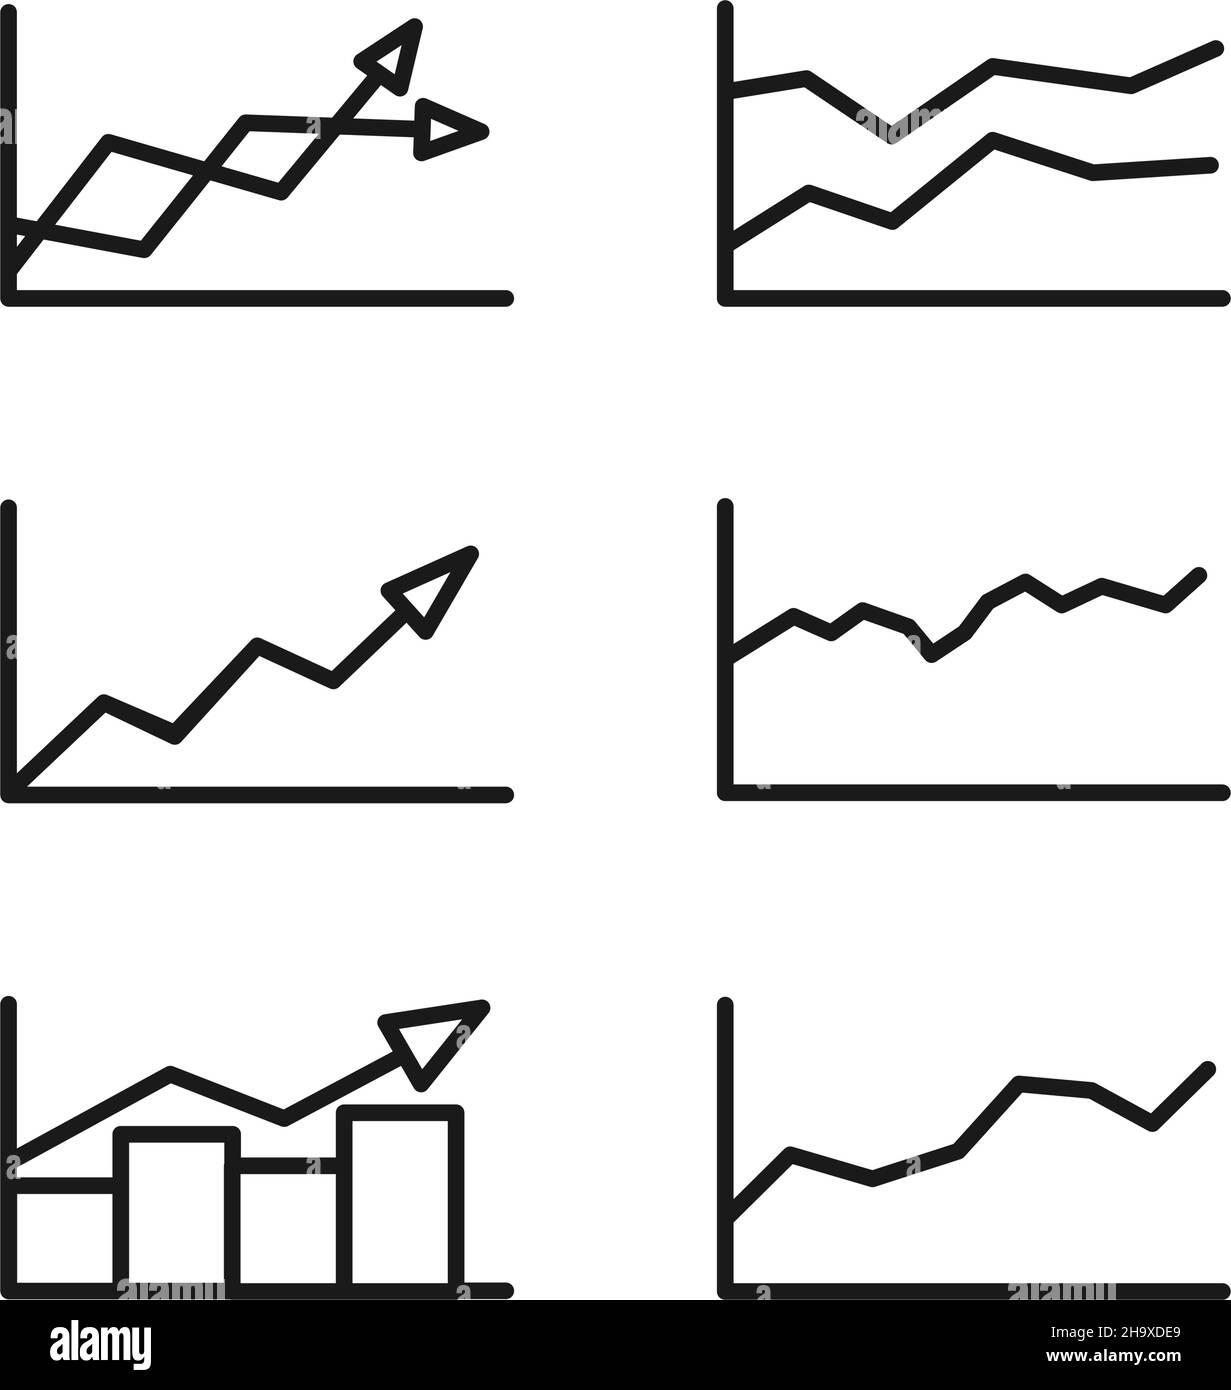 Line art black and white rising graph set. Vector illustration for leaflet, web site or application decor Stock Vector